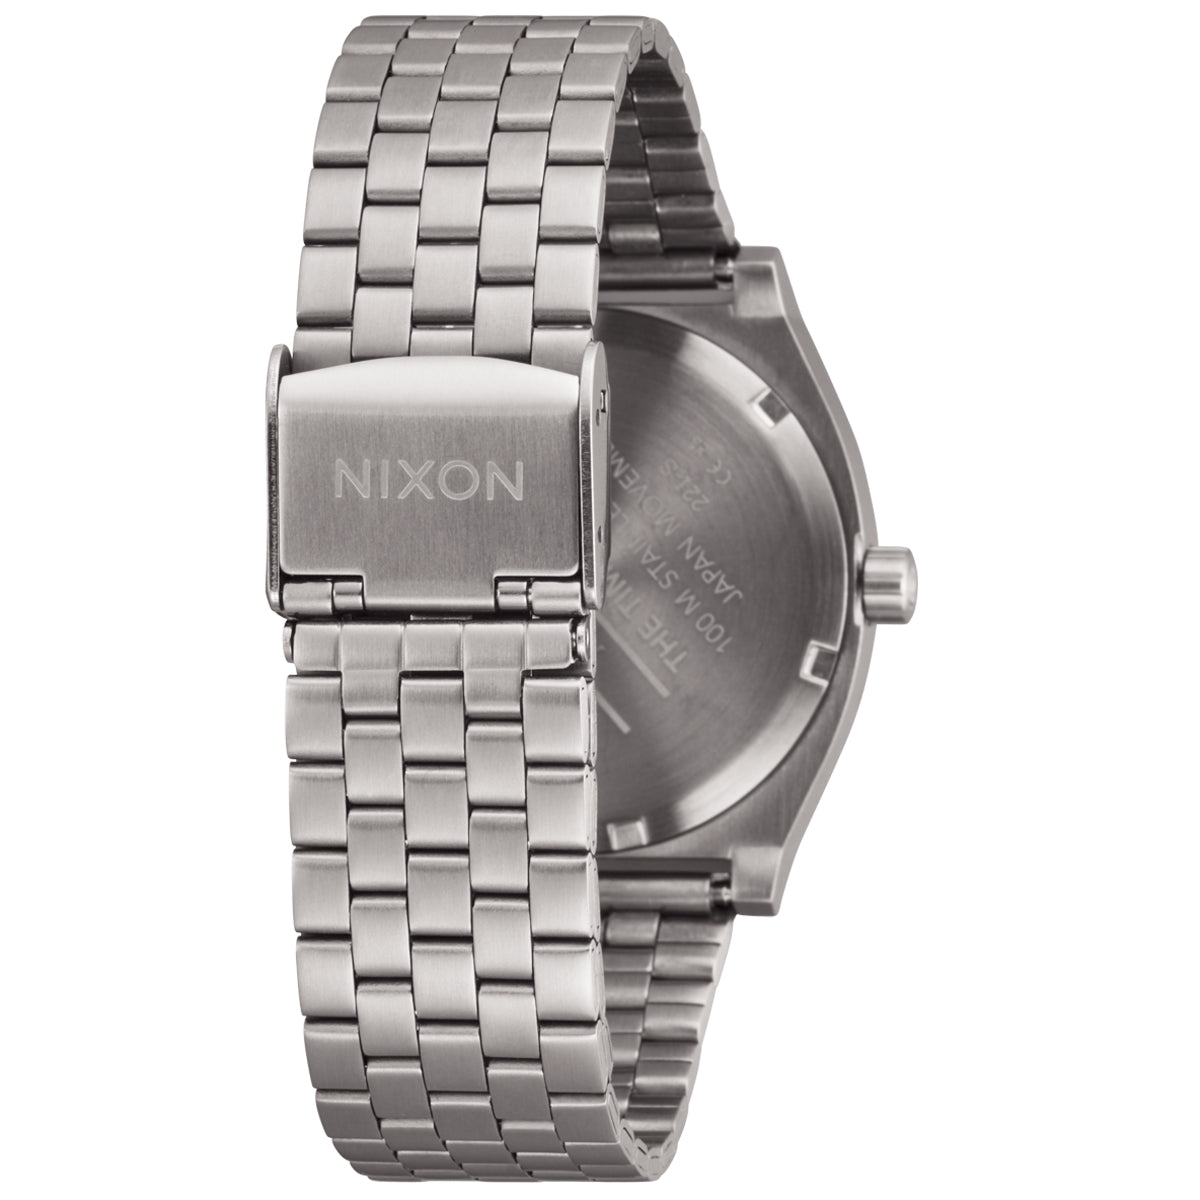 Nixon Time Teller Watch - Light Gunmetal/Dusty Blue image 2